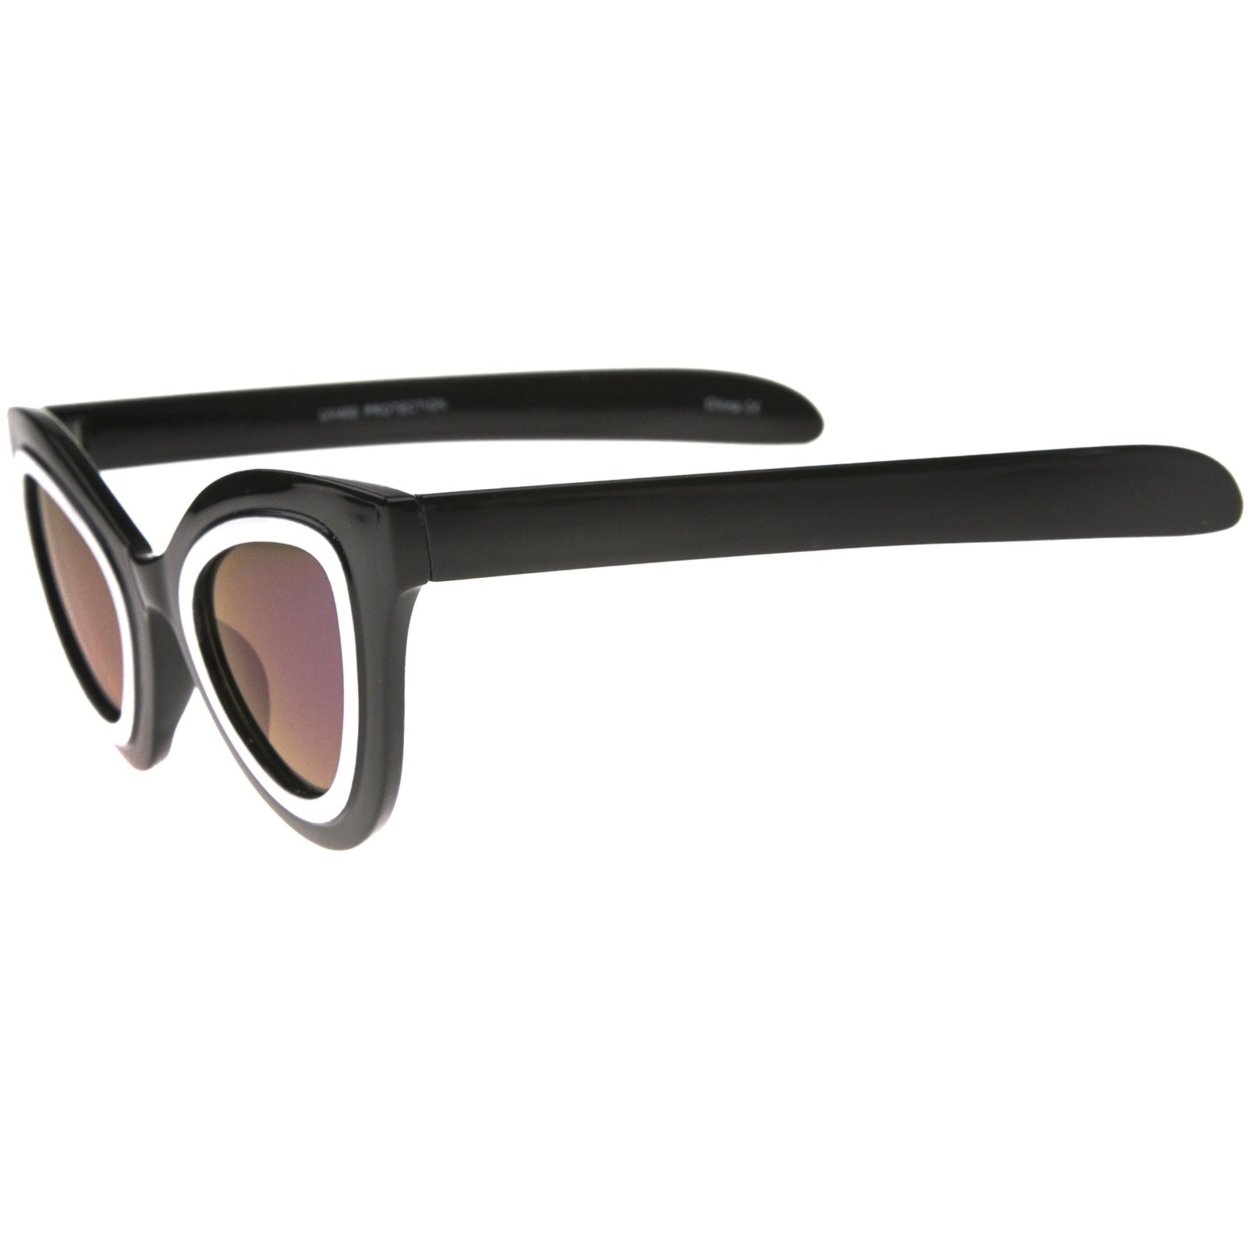 Womens High Fashion Two-Toned Mirrored Cat Eye Sunglasses 42mm - Shiny Black-White / Magenta Mirror